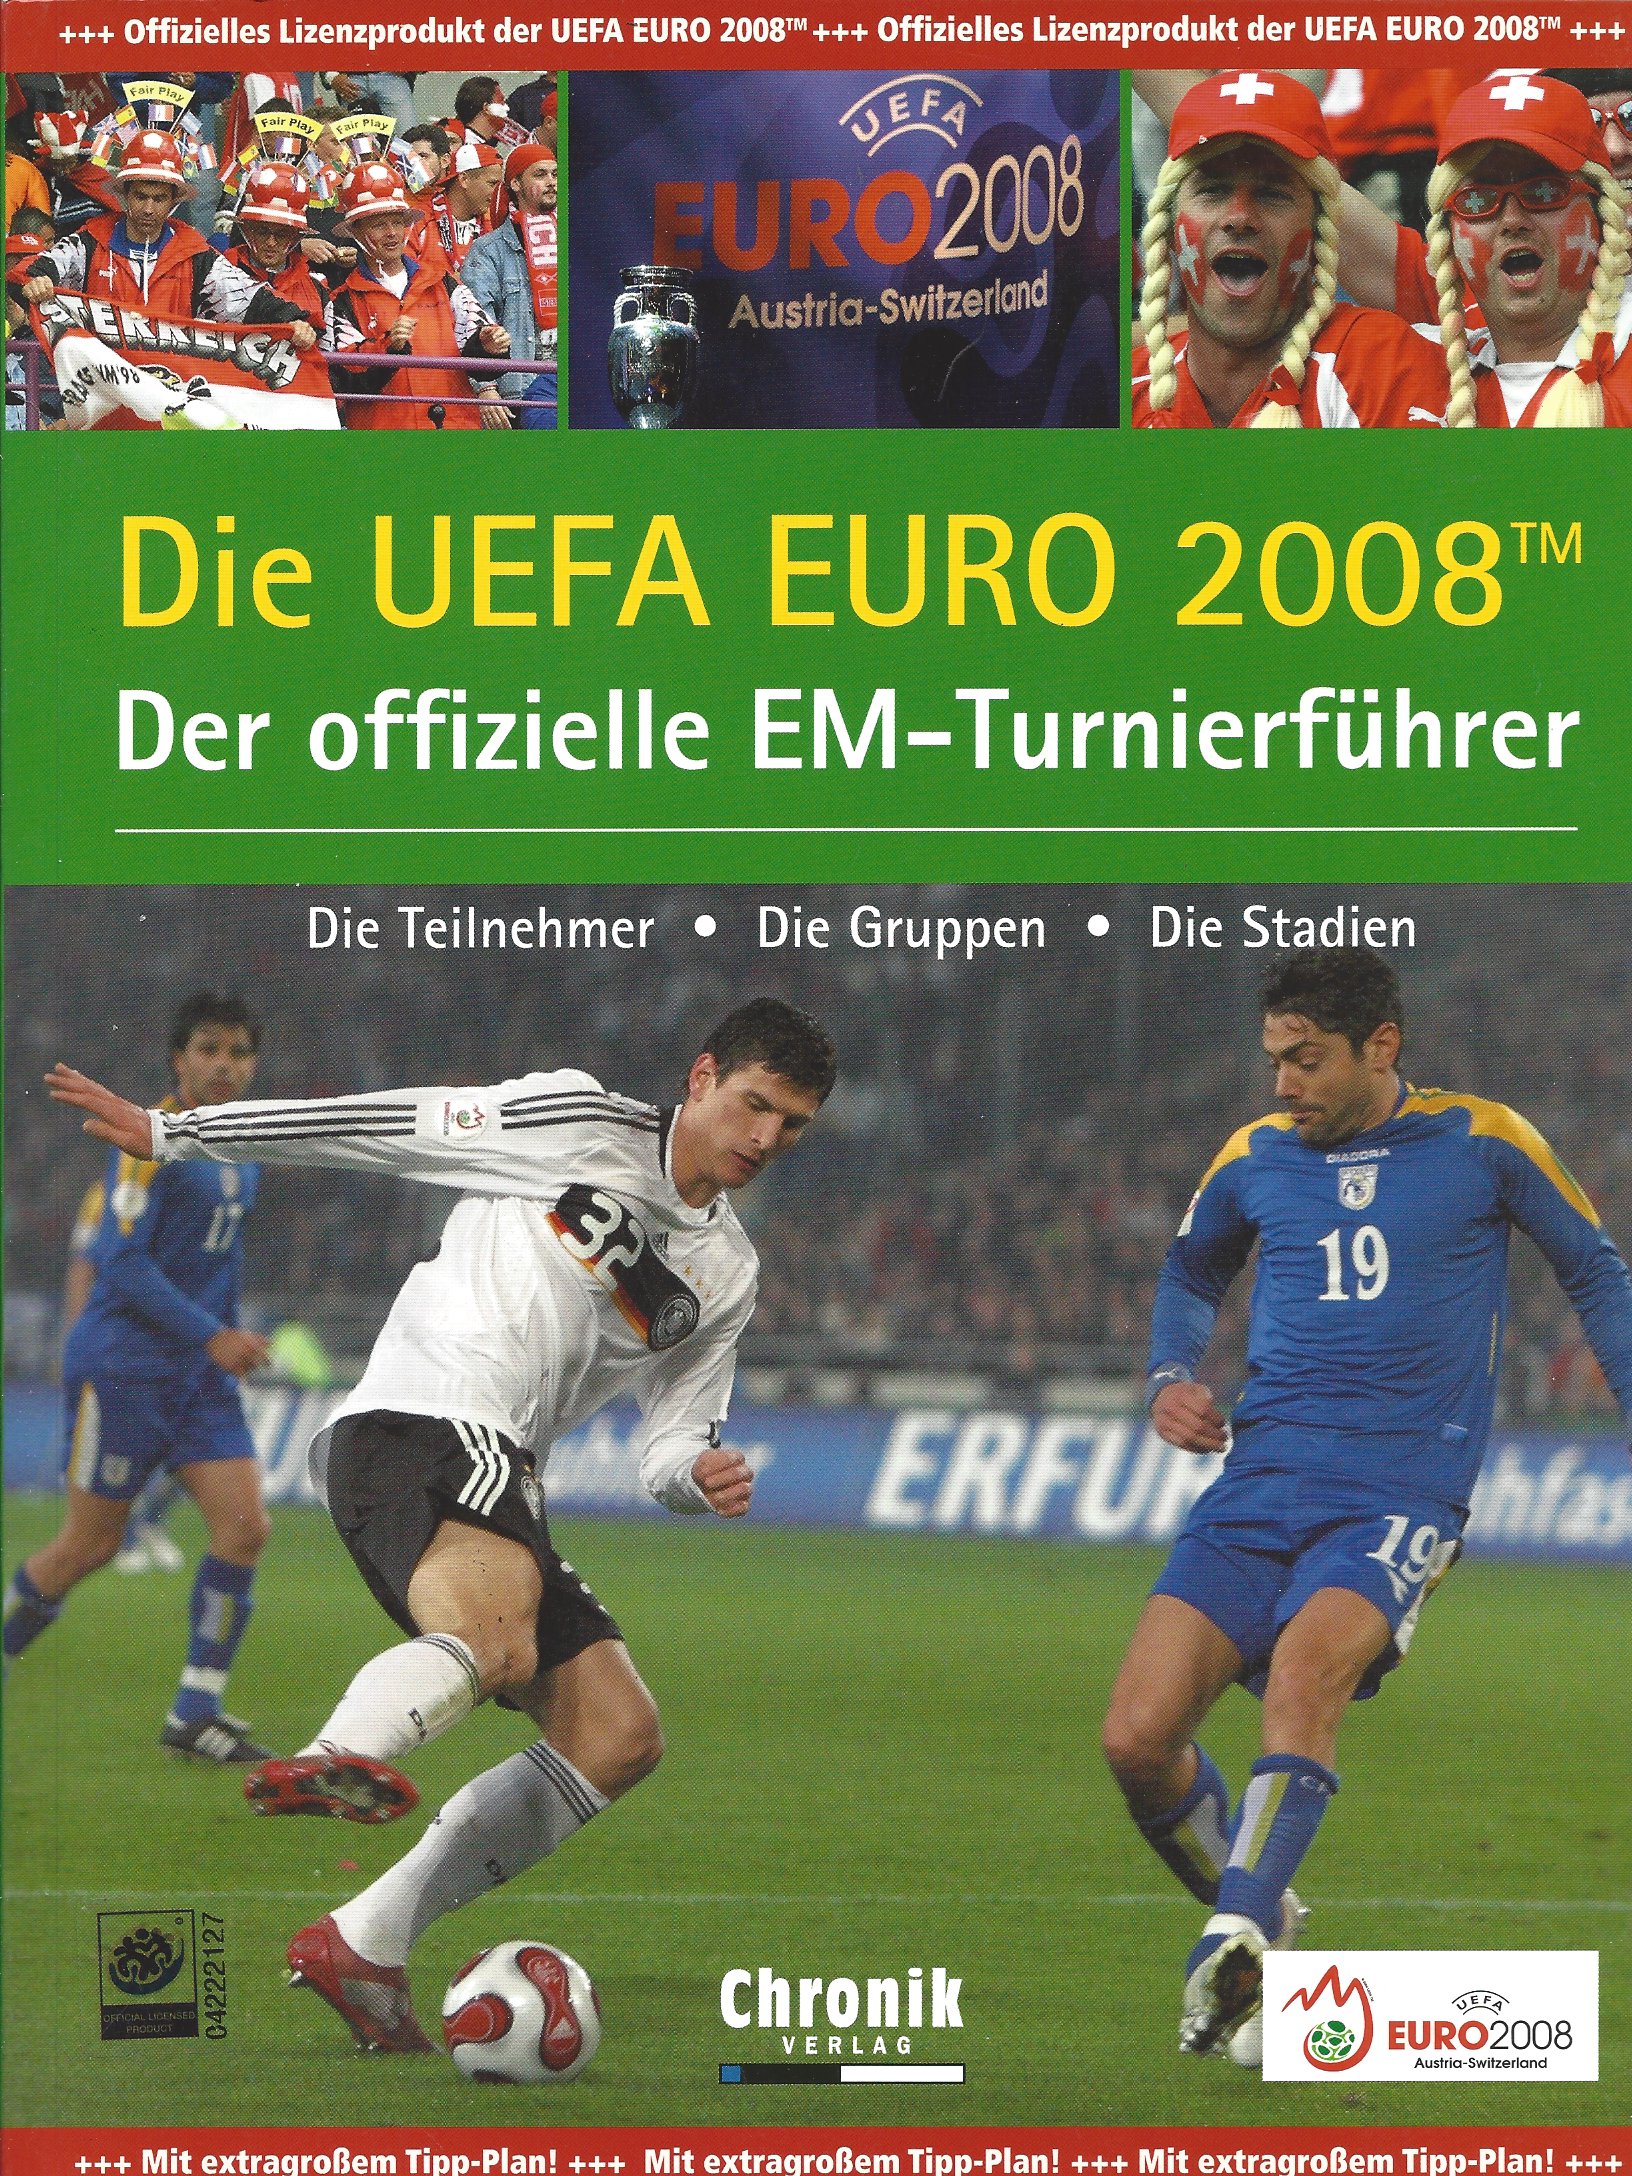 uefa euro 2008 cso